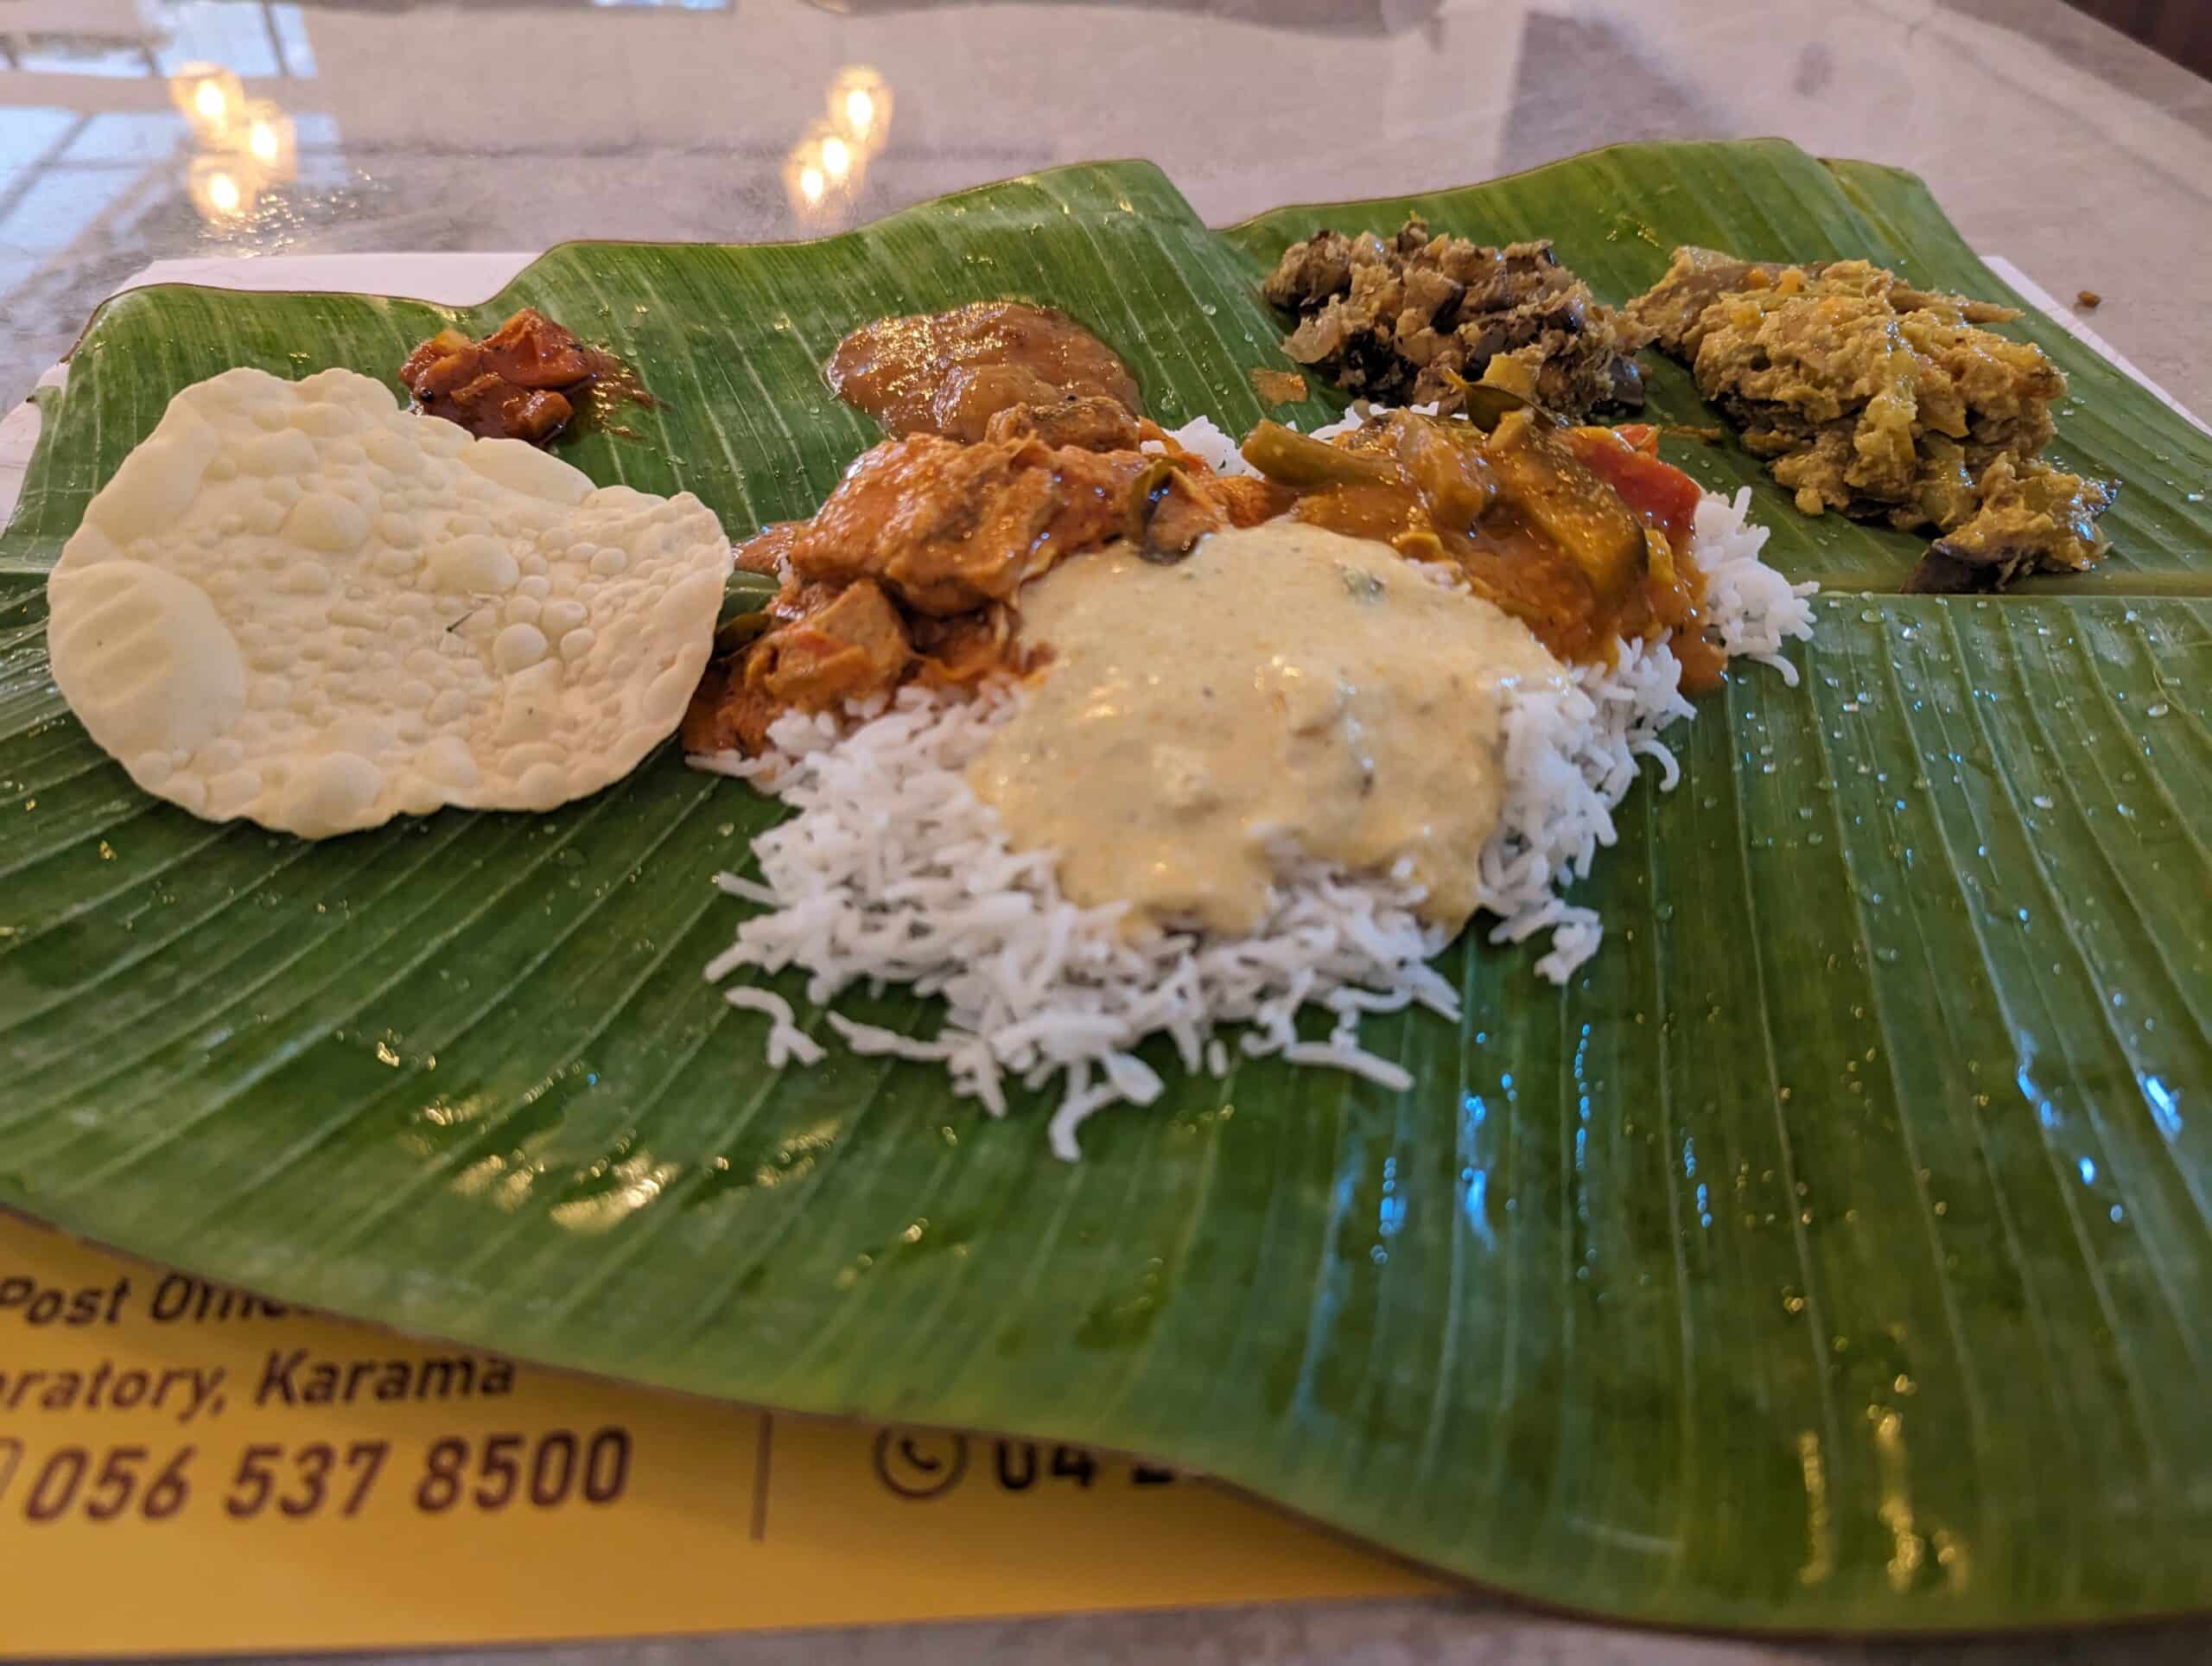 Scrumptious South Indian Fish Curry Meal at Lallumma’s | Cheap Eats Dubai 92